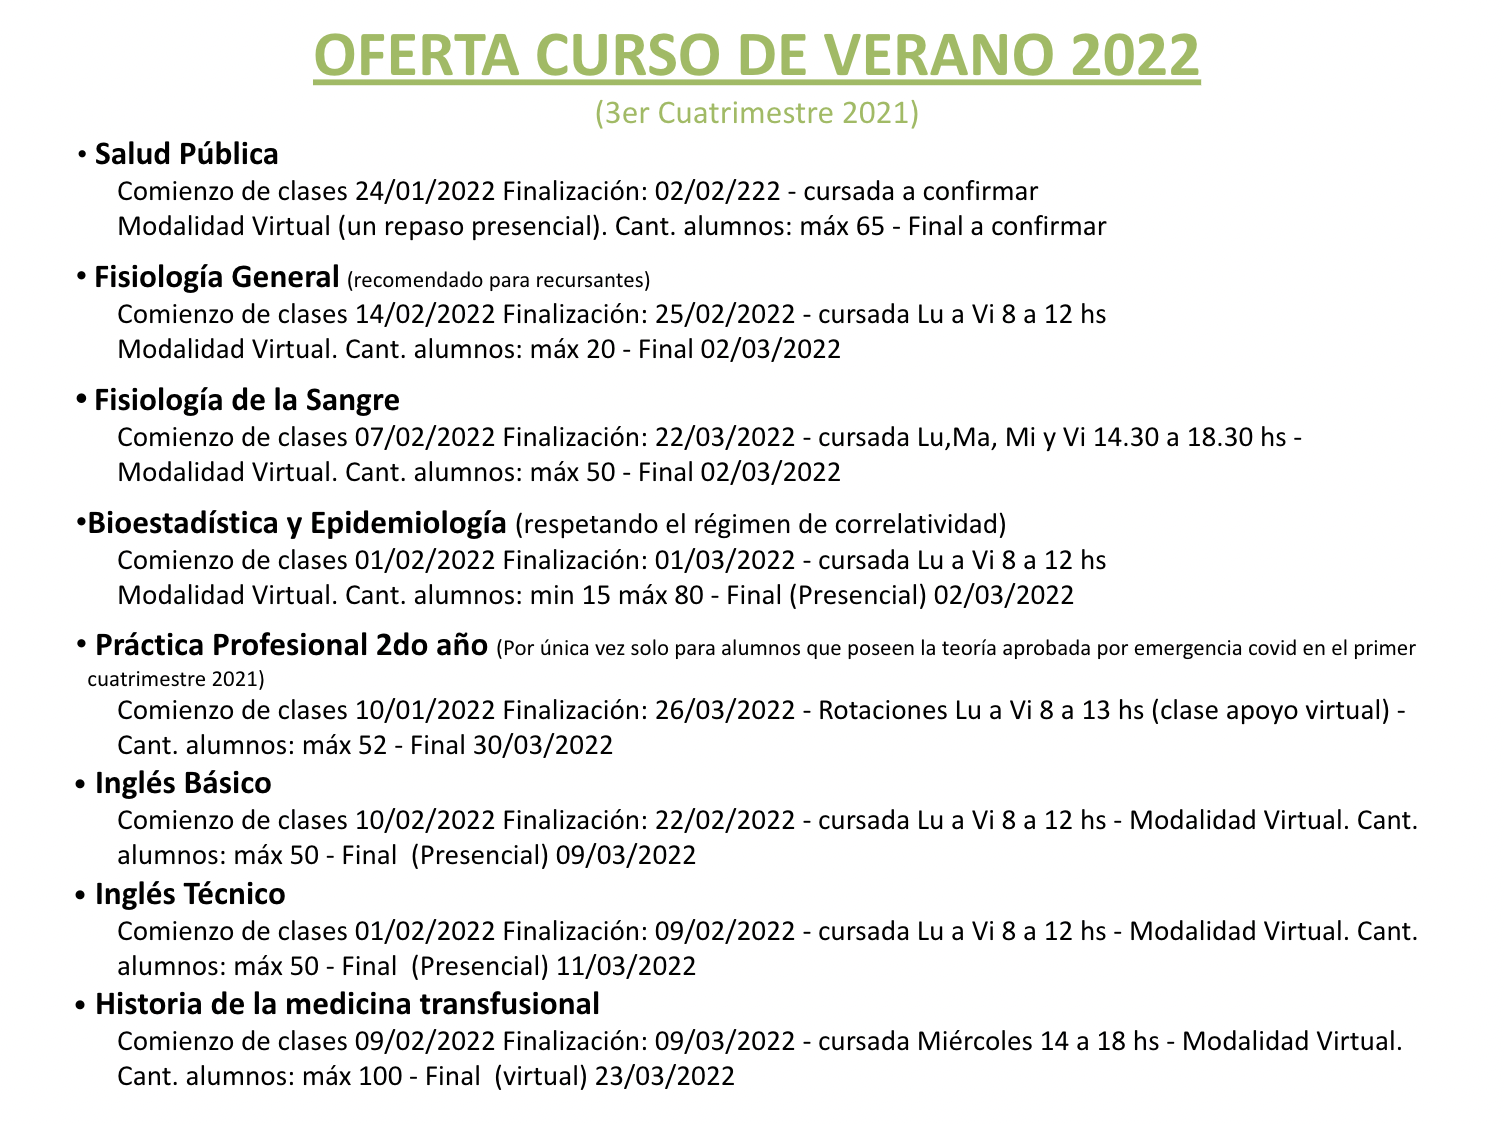 CV 2022 oferta